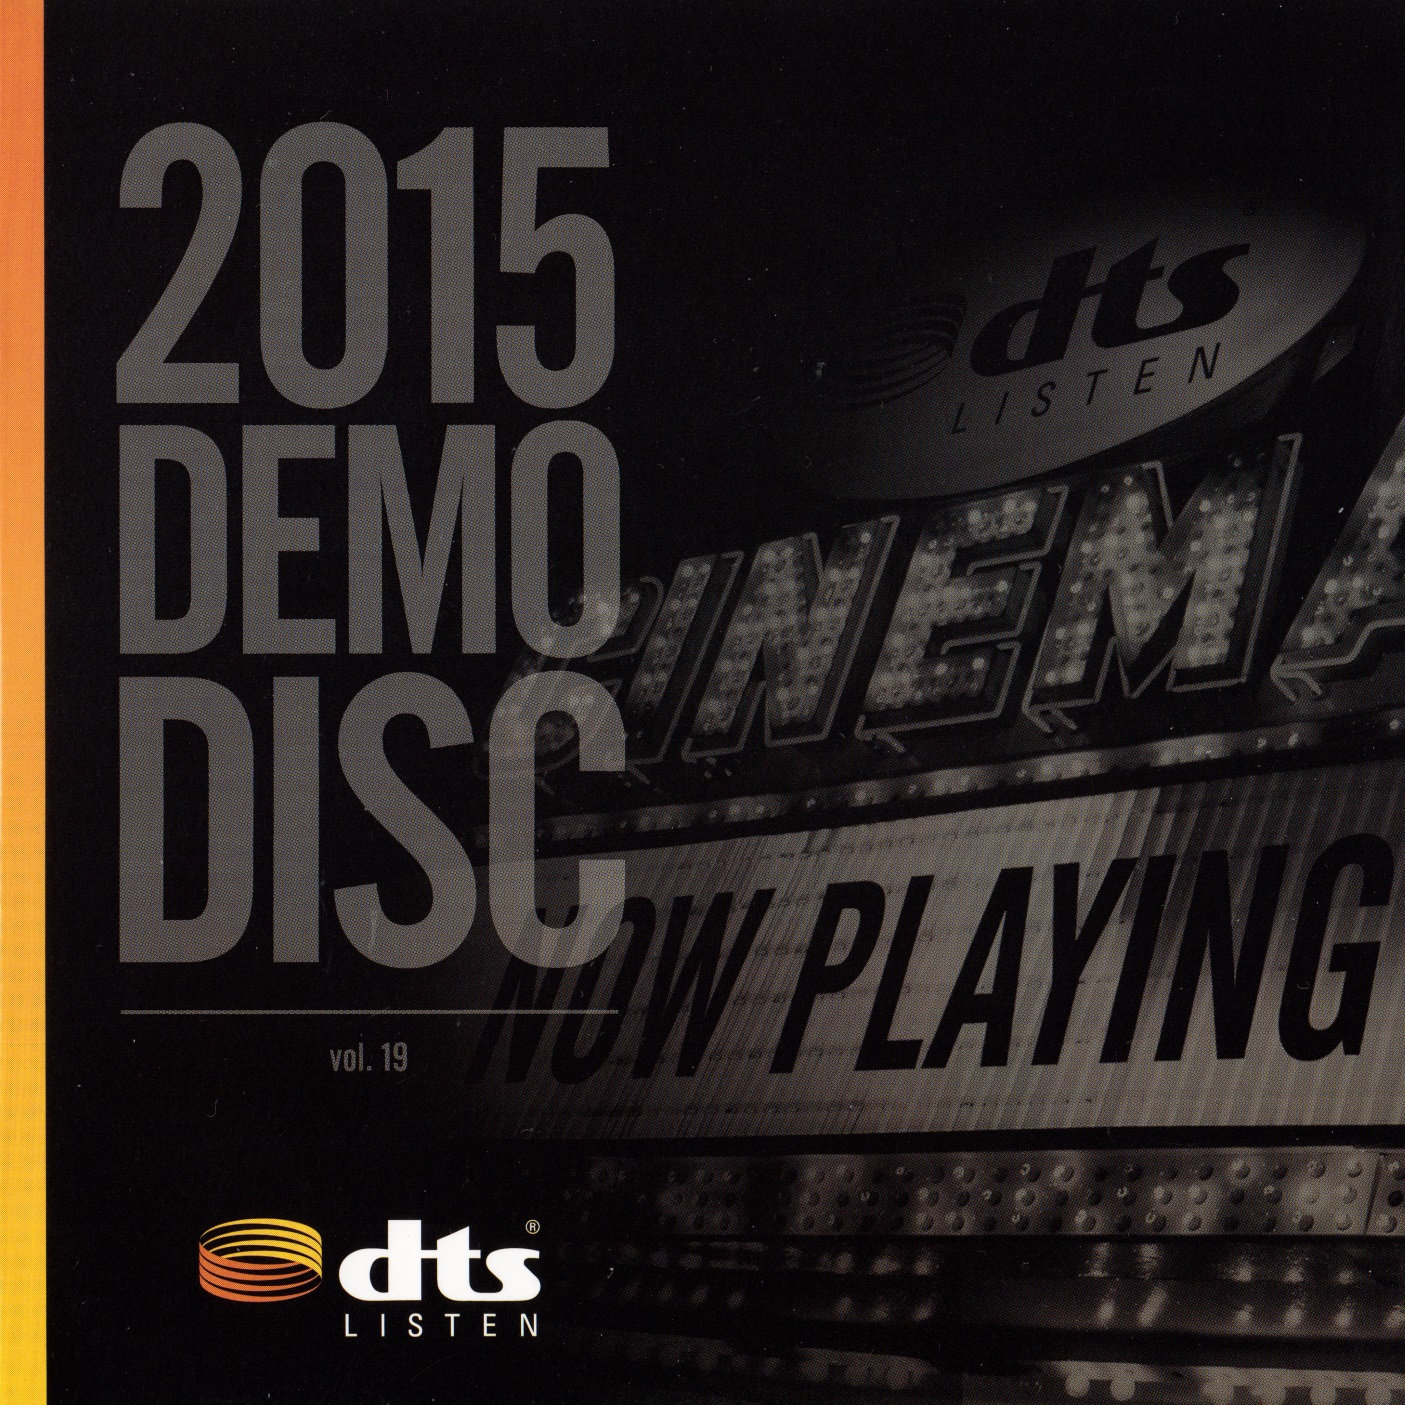 DTS Demonstration Disc Vol 19 2D 3D DTS X (2015)